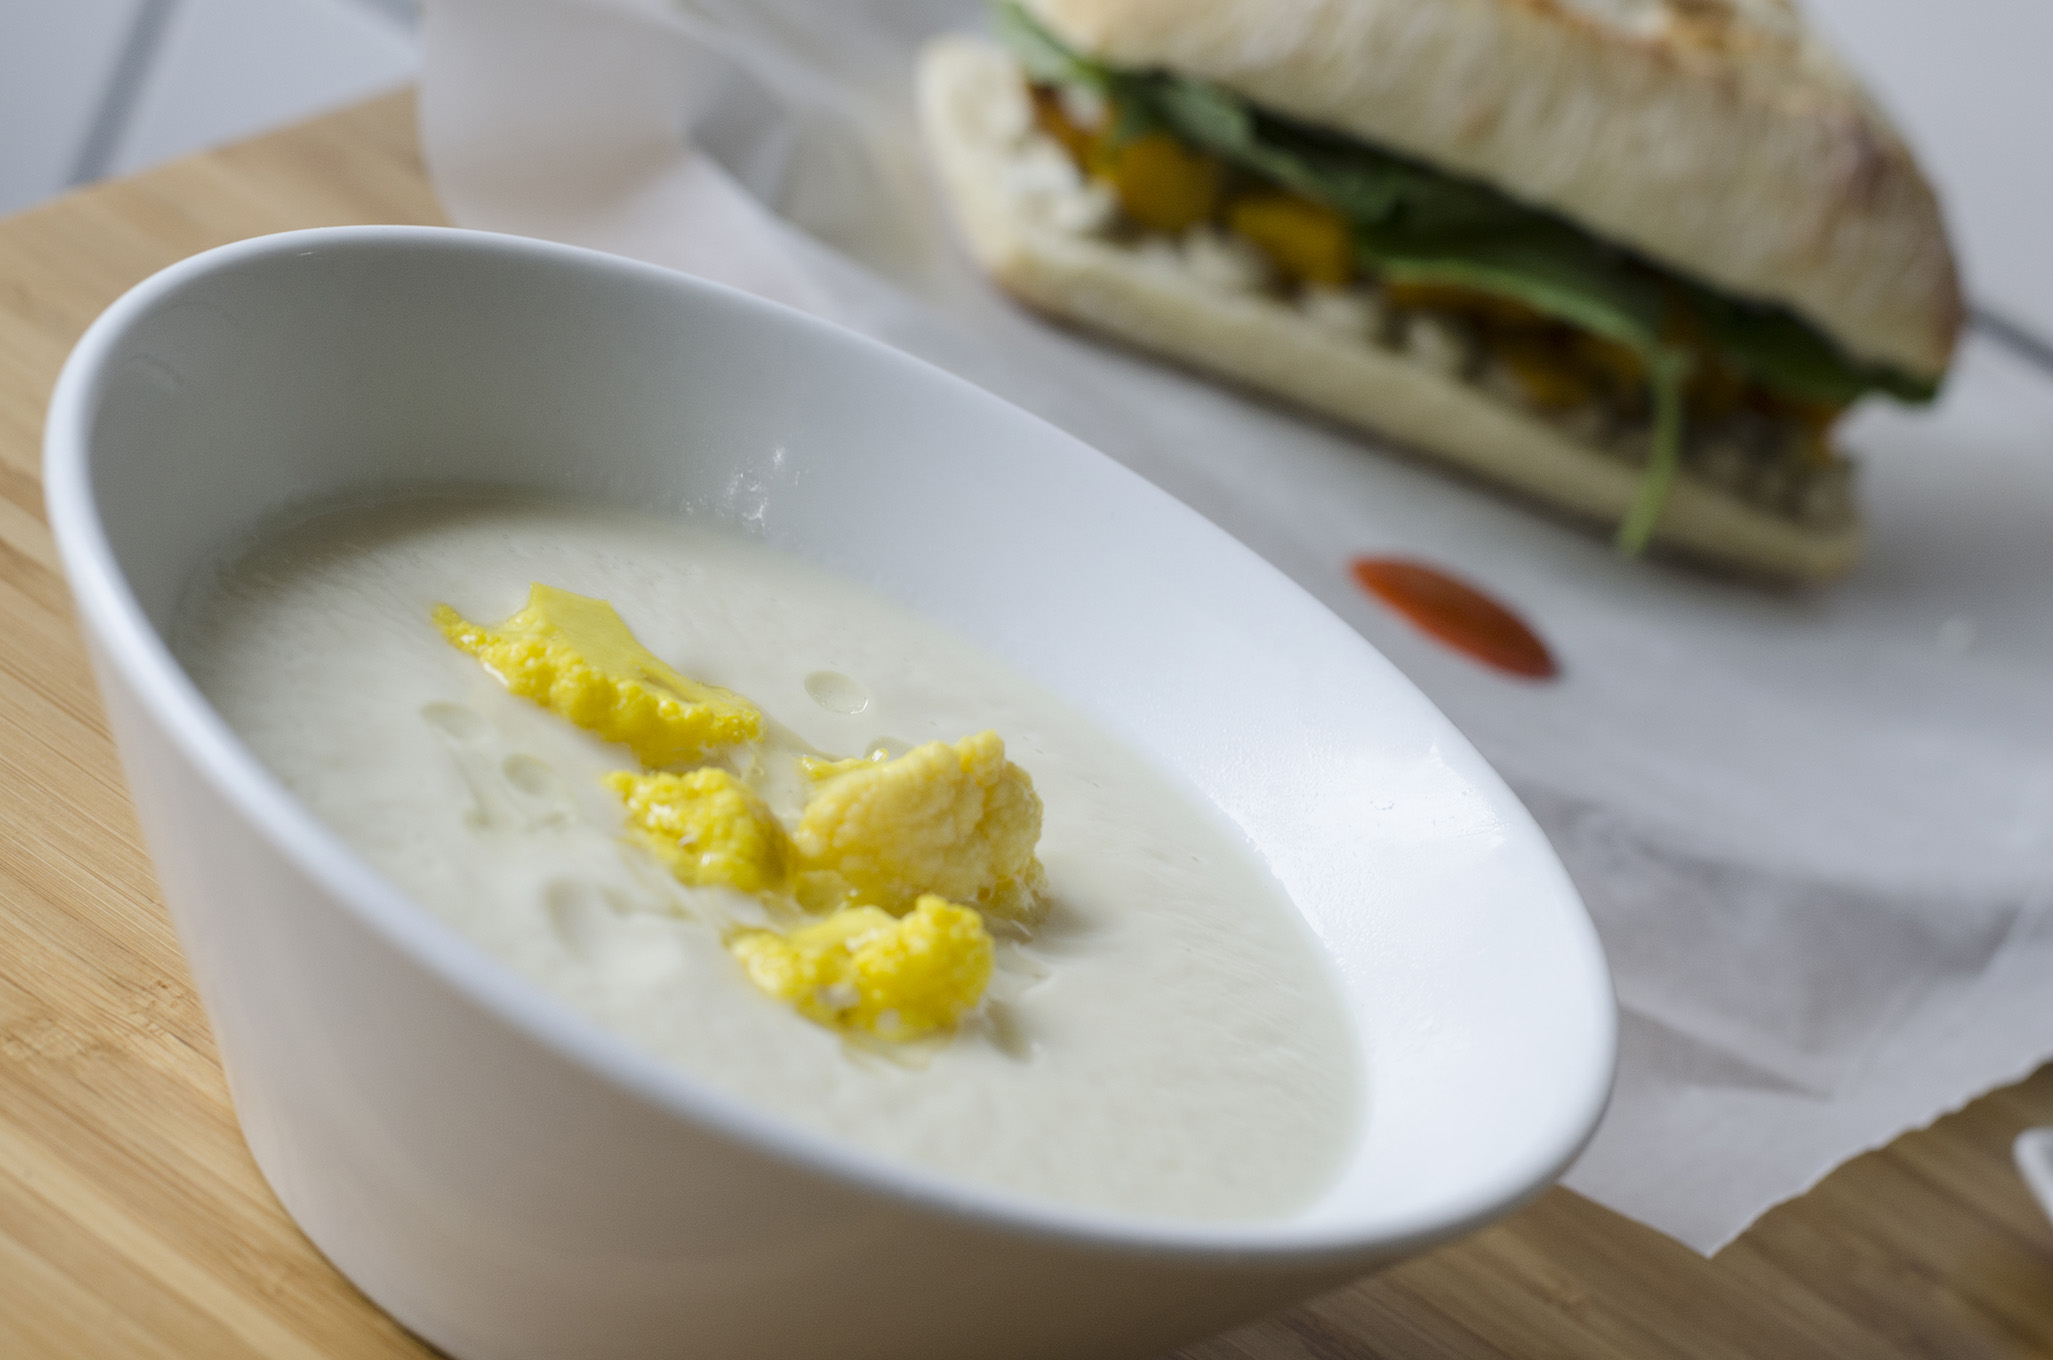 Cauliflower soup? Yes, please!